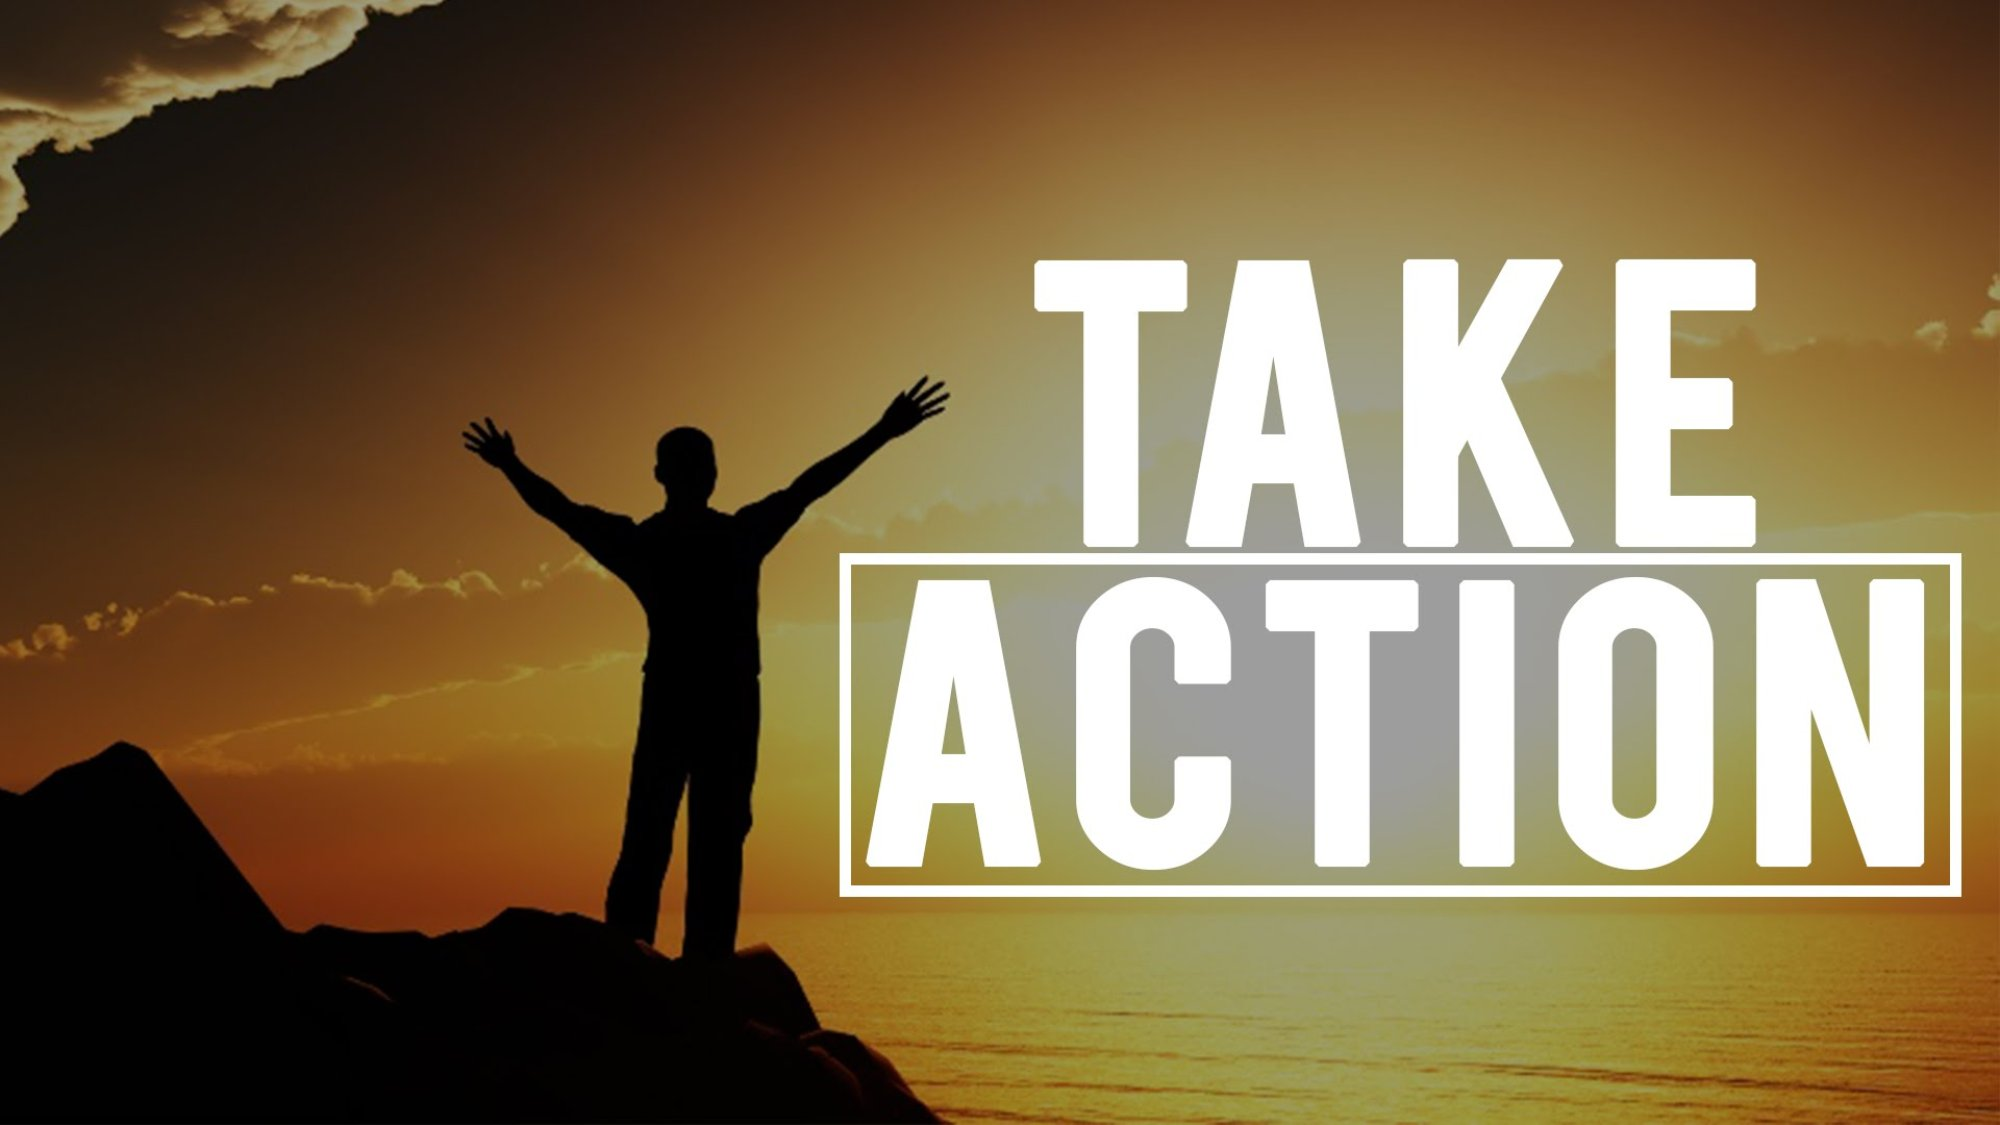 Take Action. Картинки Actions. Tuka. Taking Action картинки. Про actions